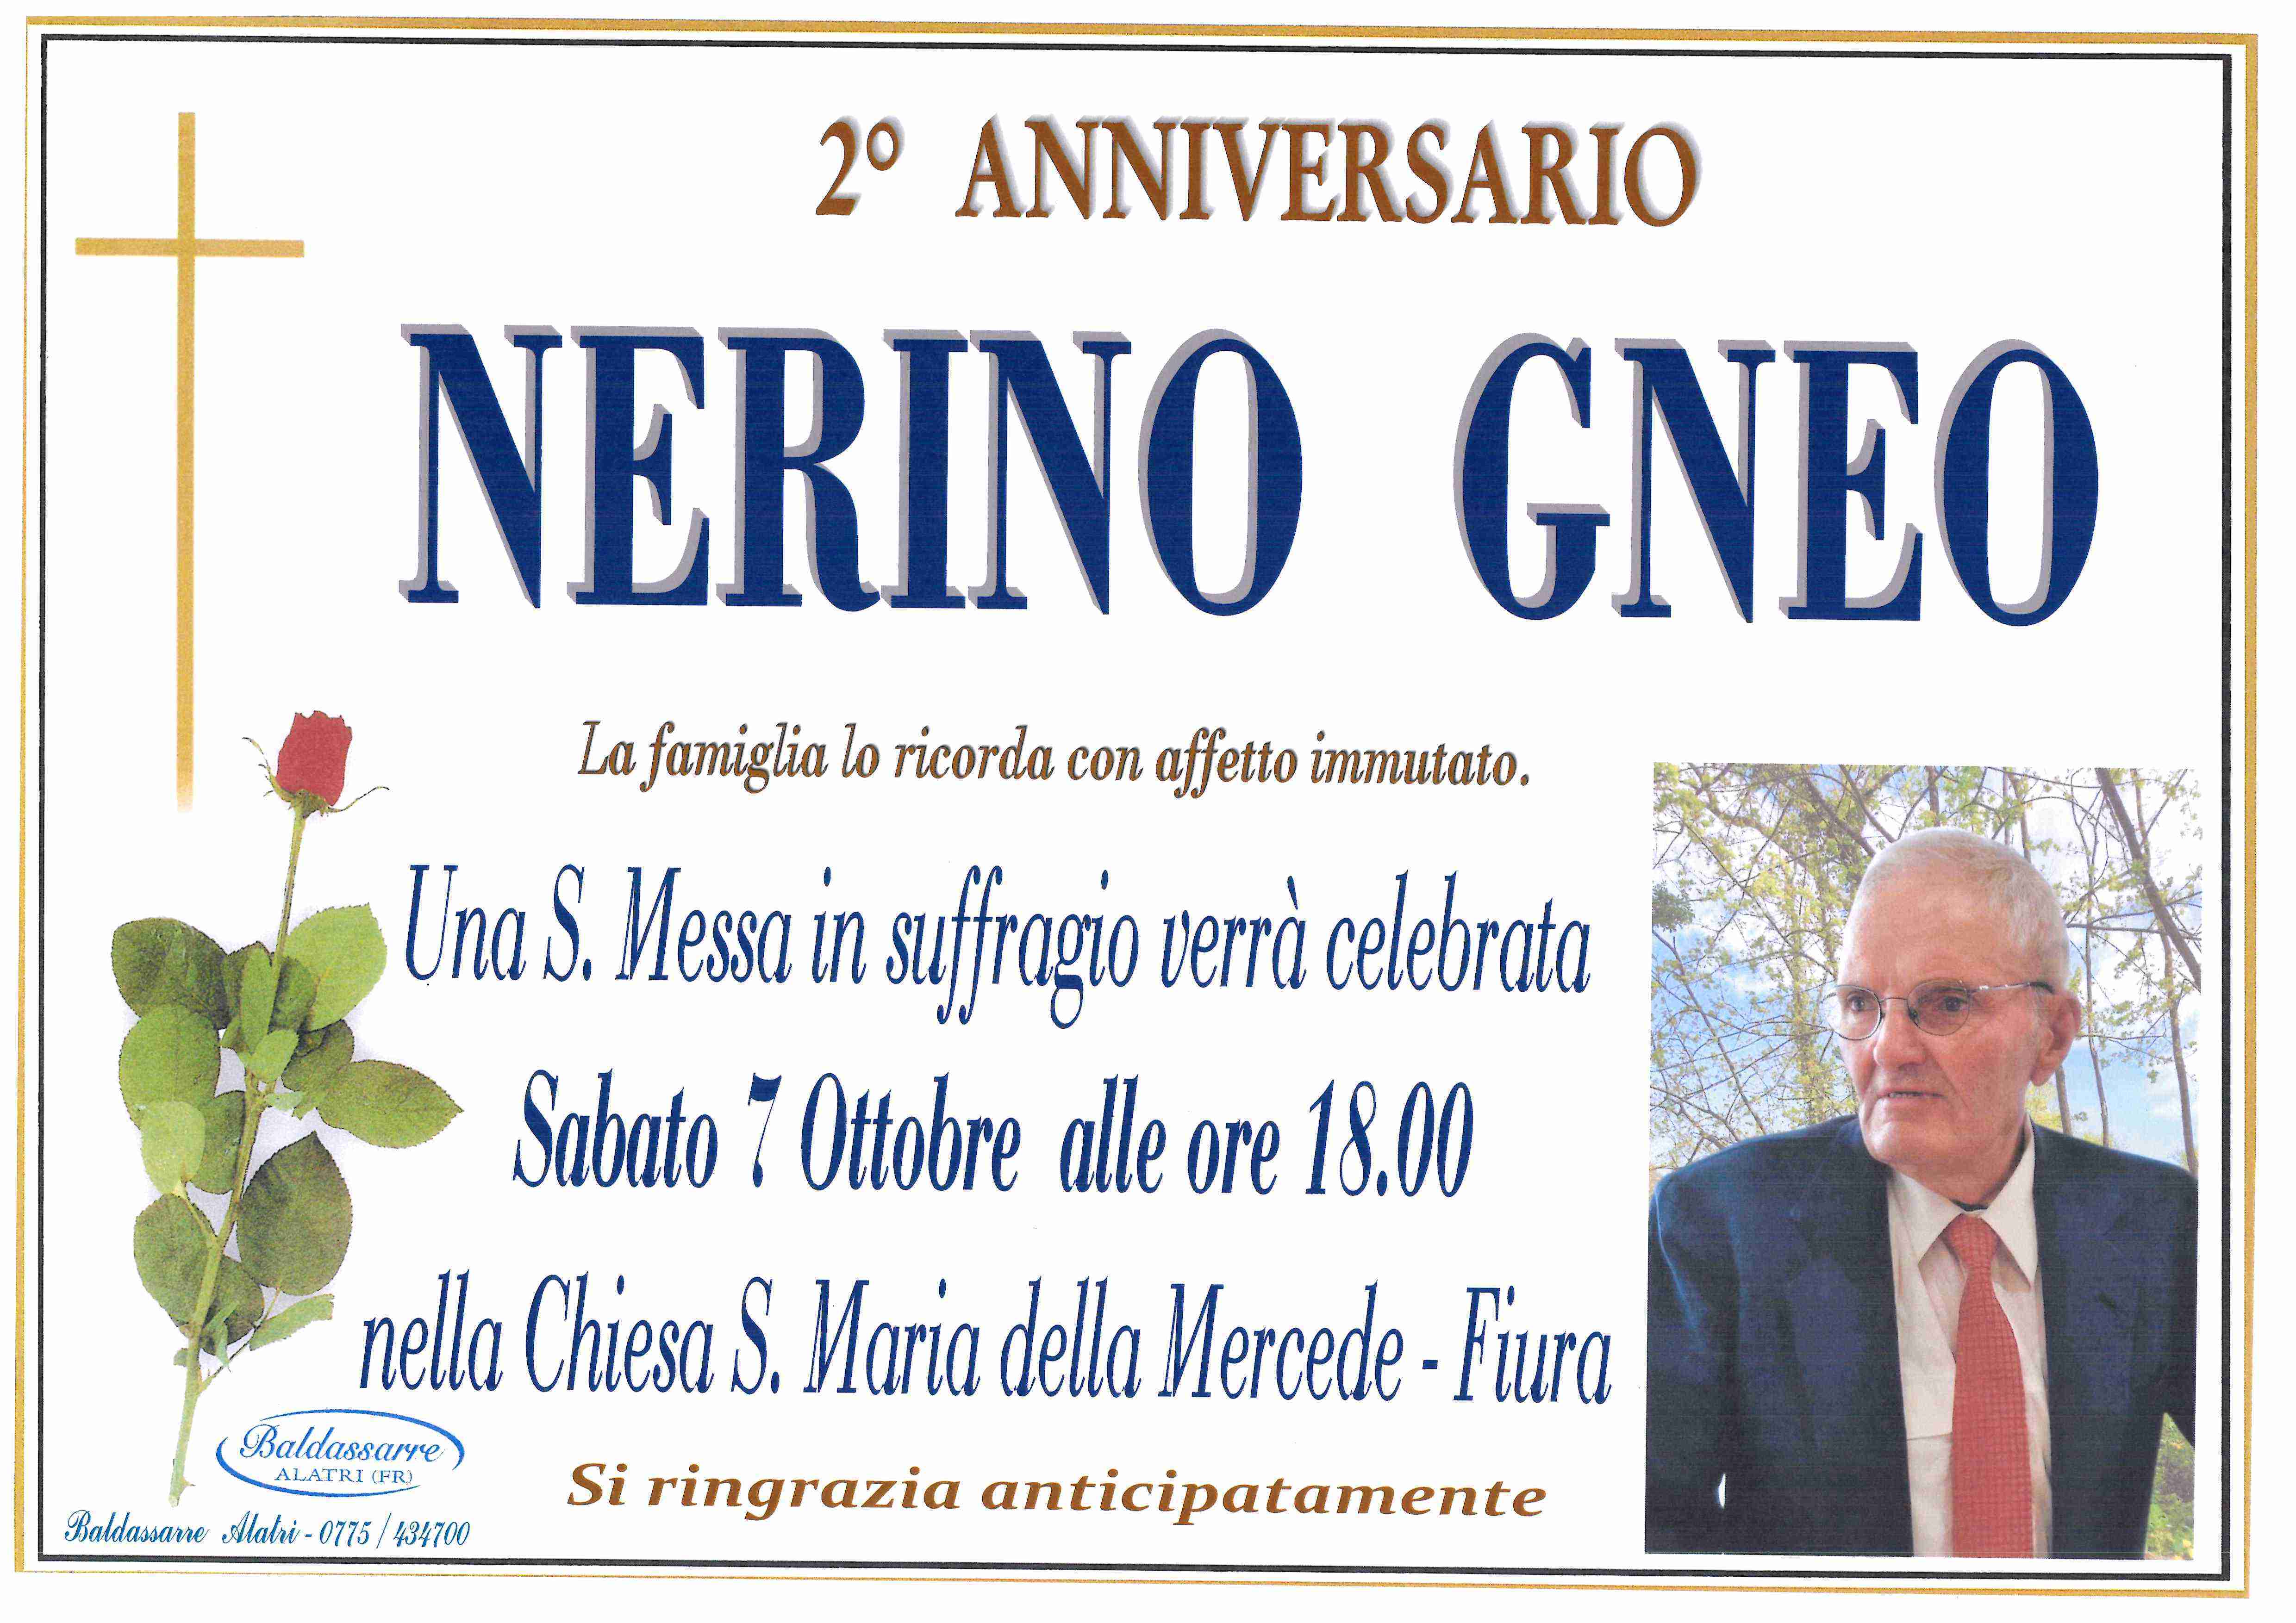 Nerino Gneo